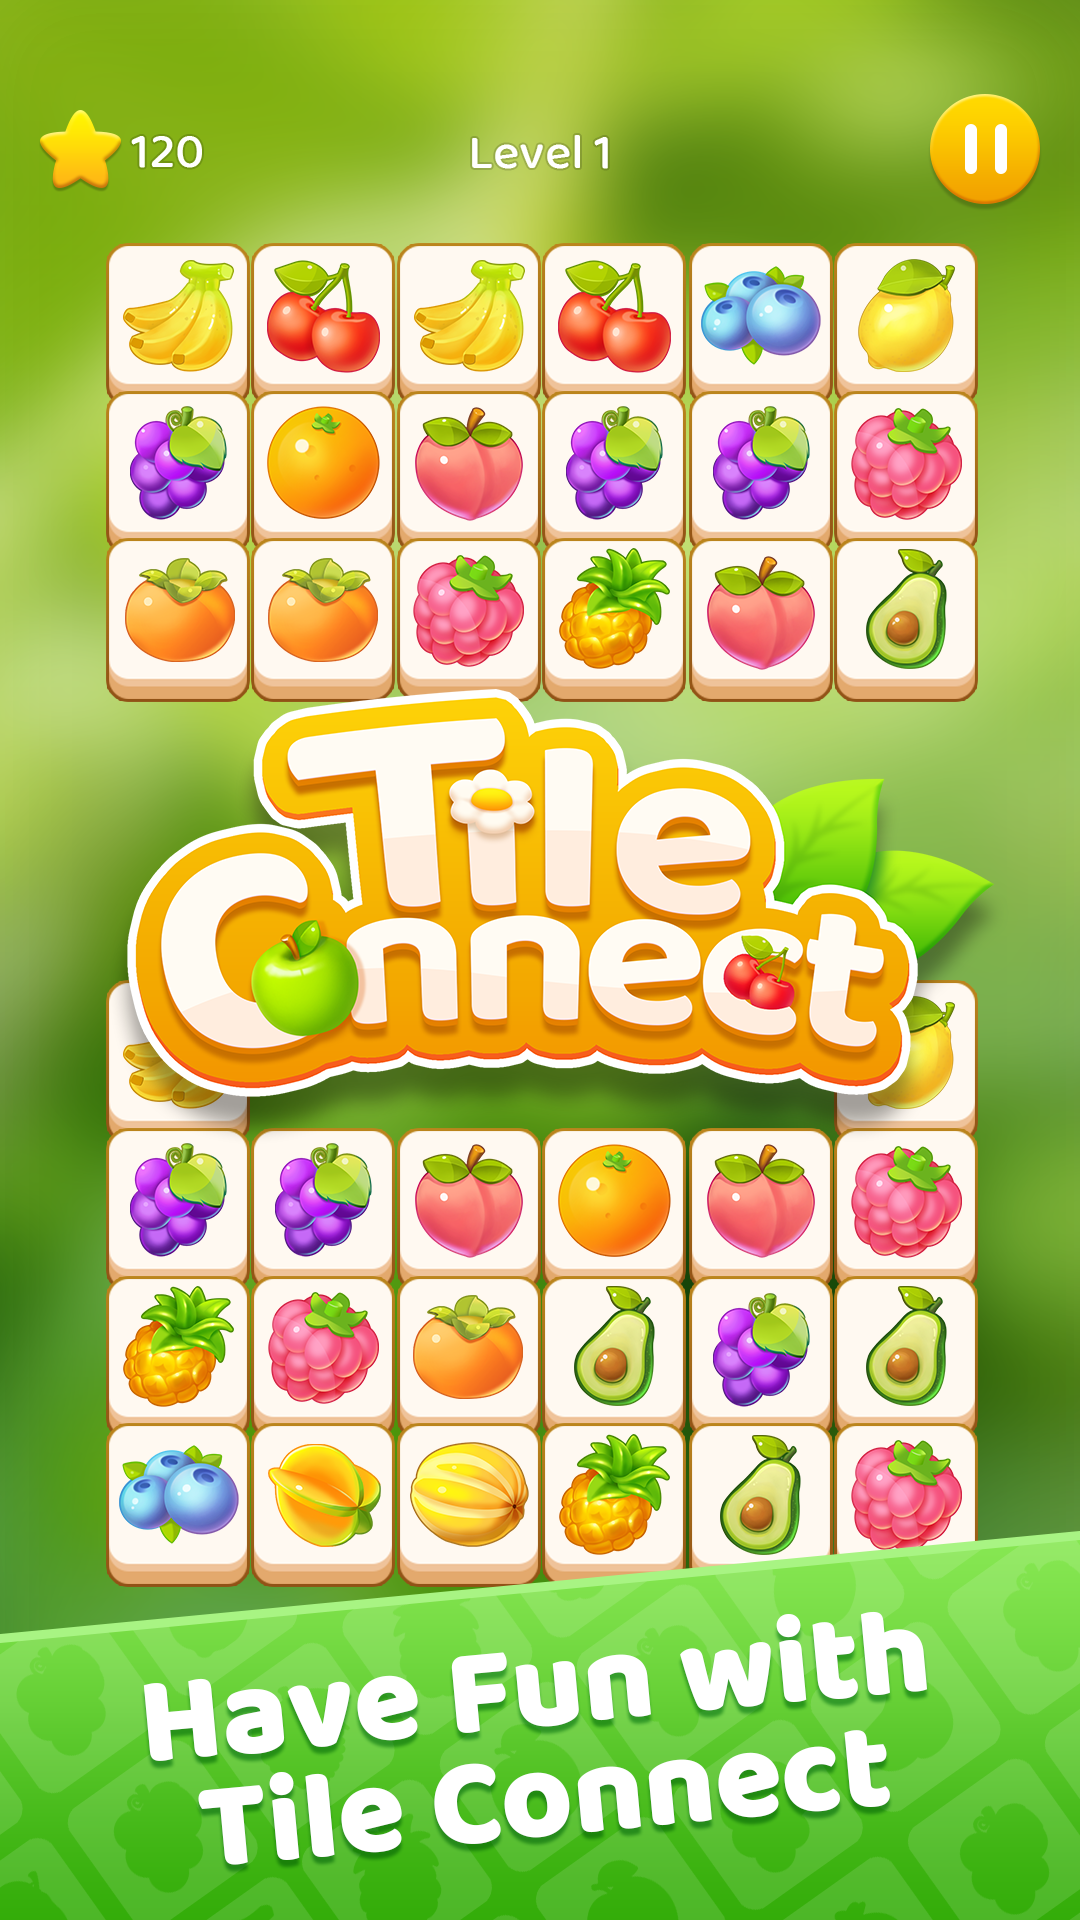 Screenshot 1 of Tile Connect - Tile Match ဂိမ်း 1.5.5